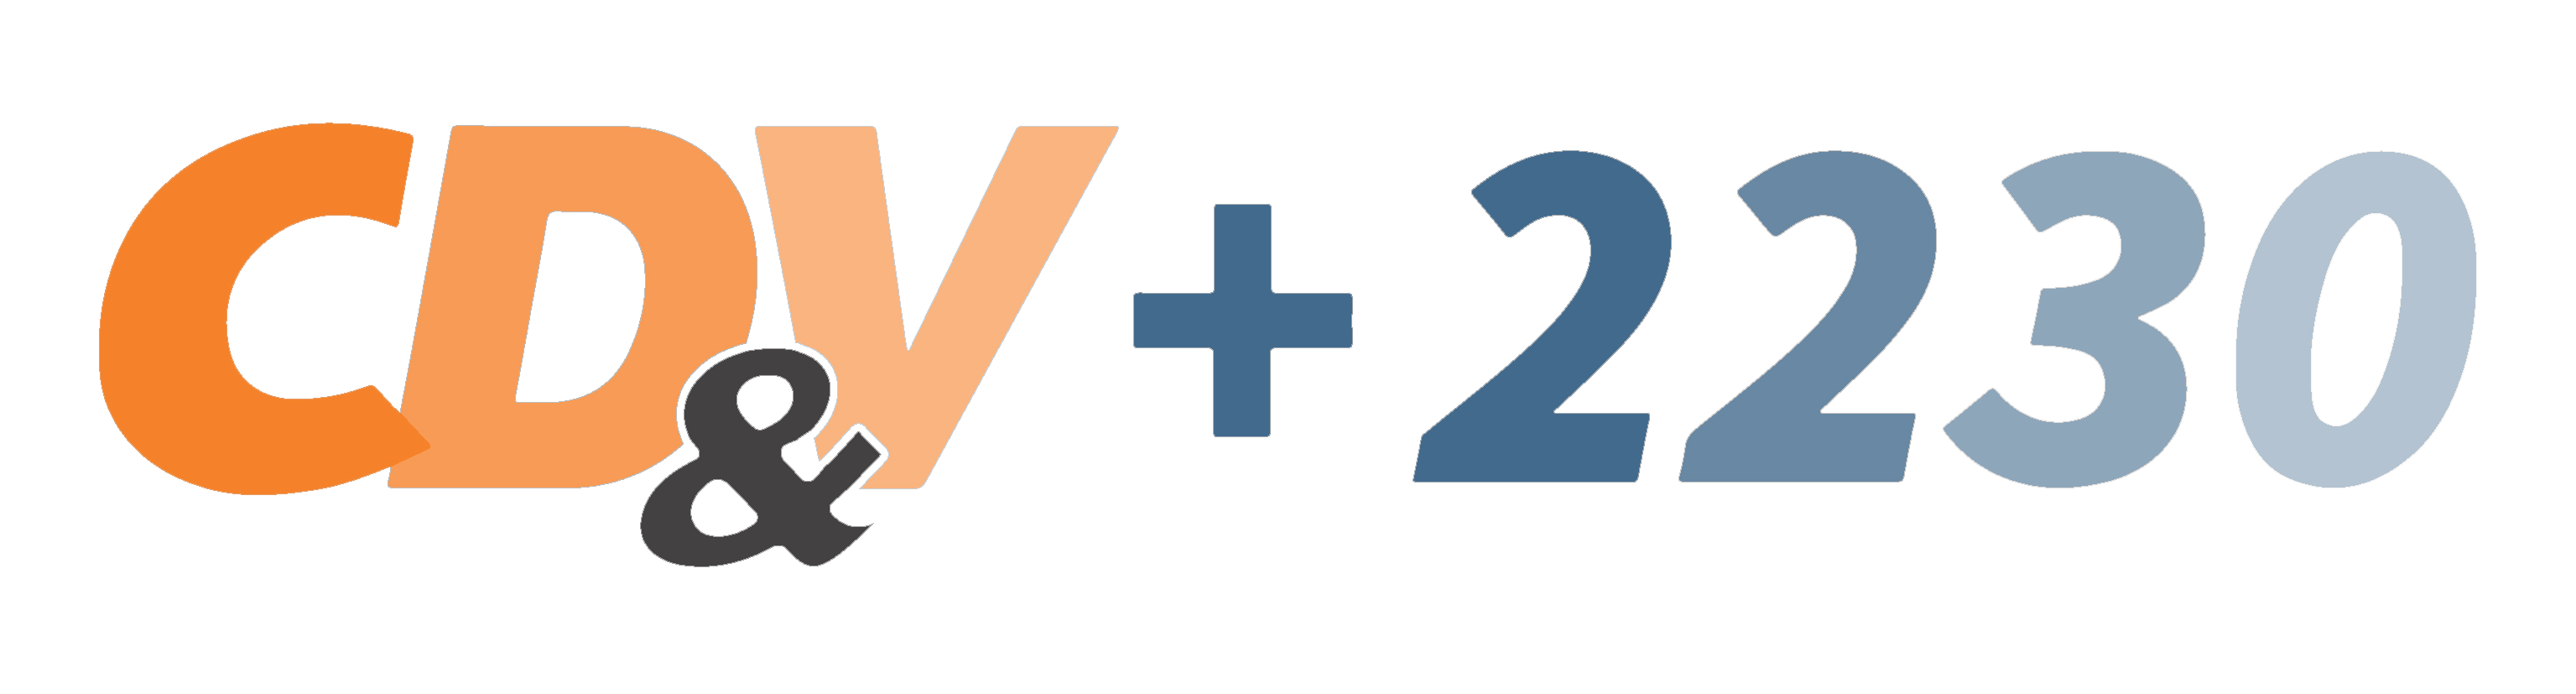 logo 2230